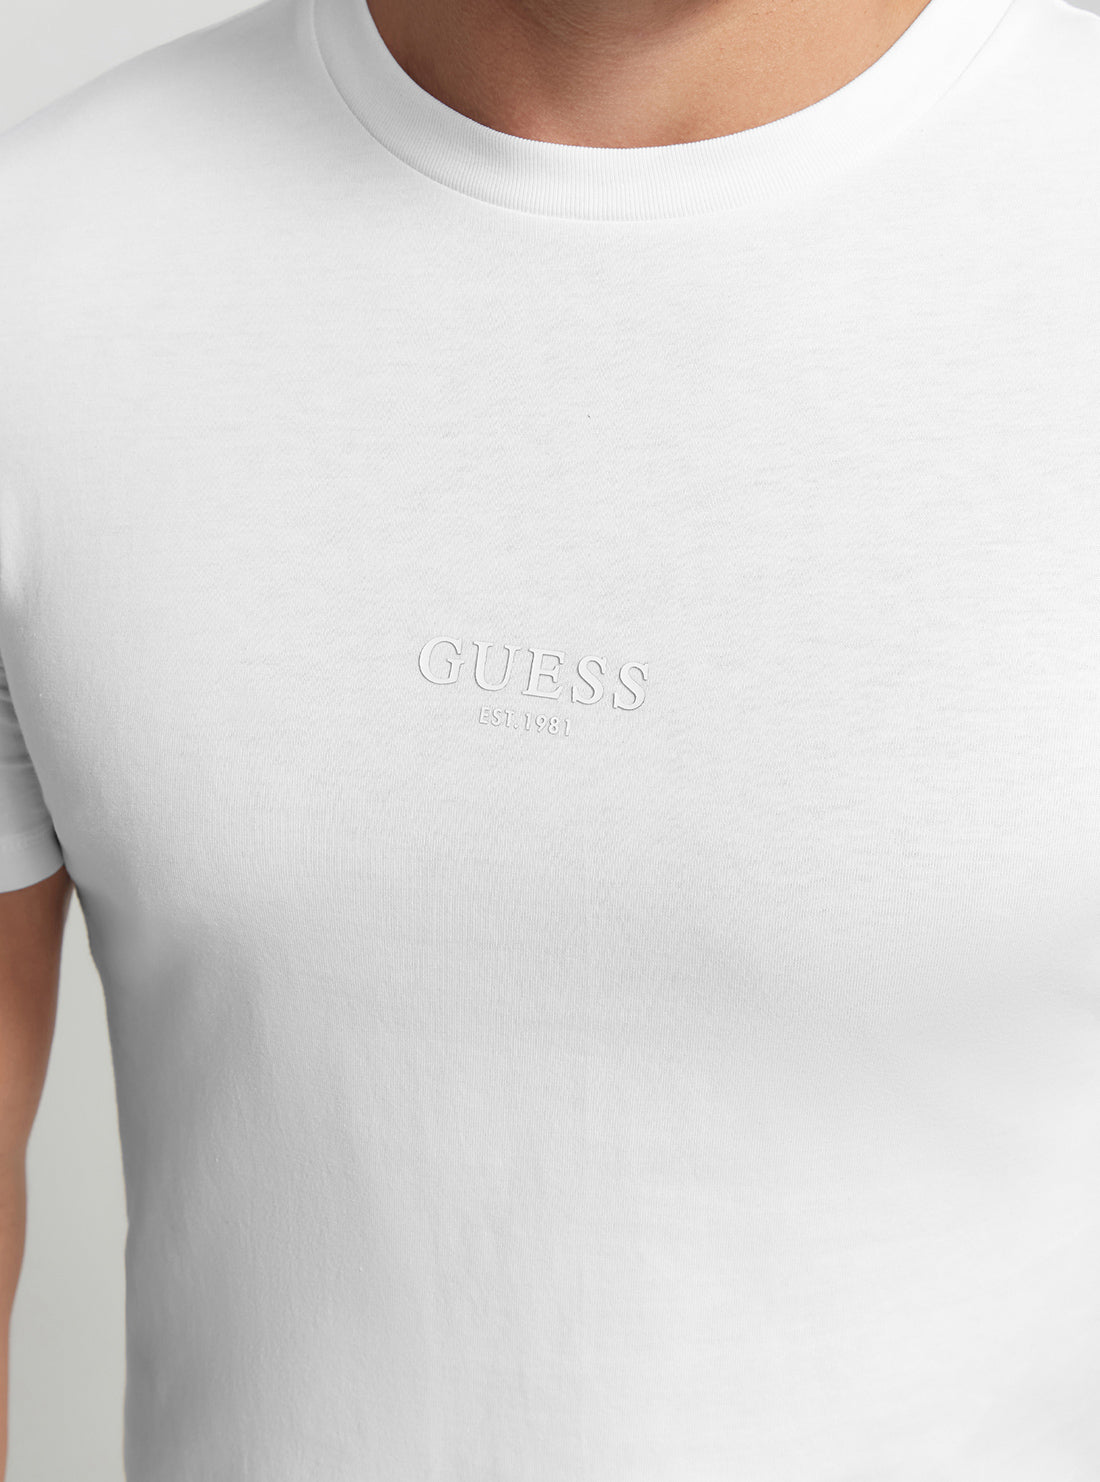 GUESS Men's Eco White Aidy T-Shirt M2YI72I3Z11 Detail View